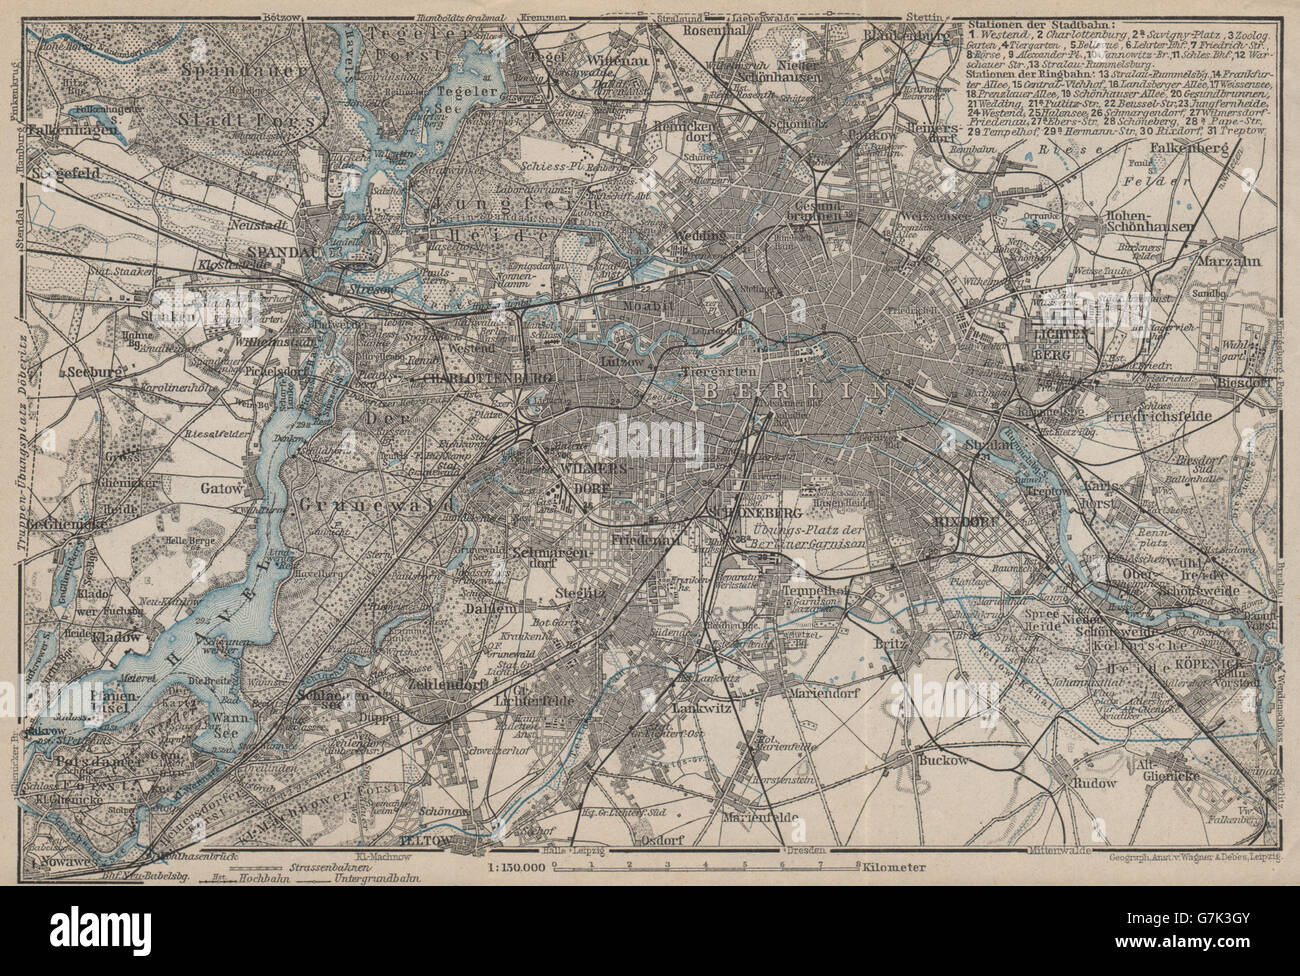 BERLIN & environs umgebung. Spandau Rixdorf Lichtenberg Zehlendorf, 1910 map Stock Photo